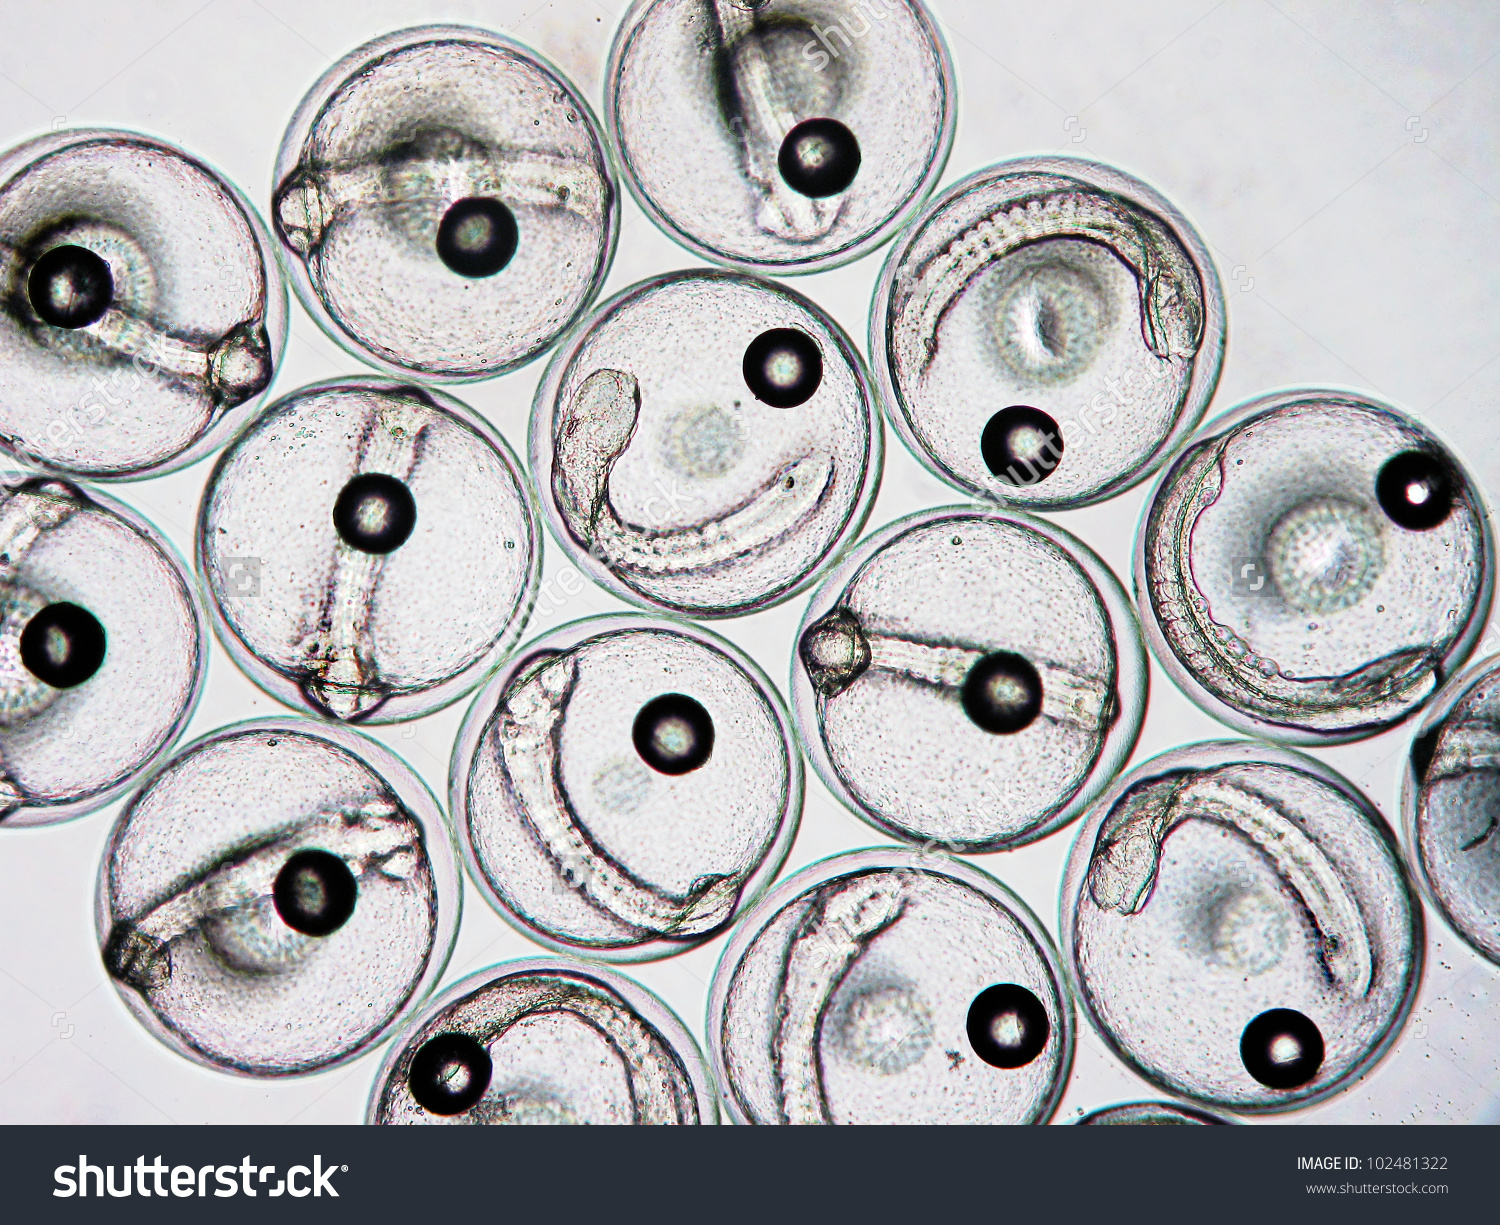 Developing Fish Eggs Under Light Microscope Stock Photo 102481322.